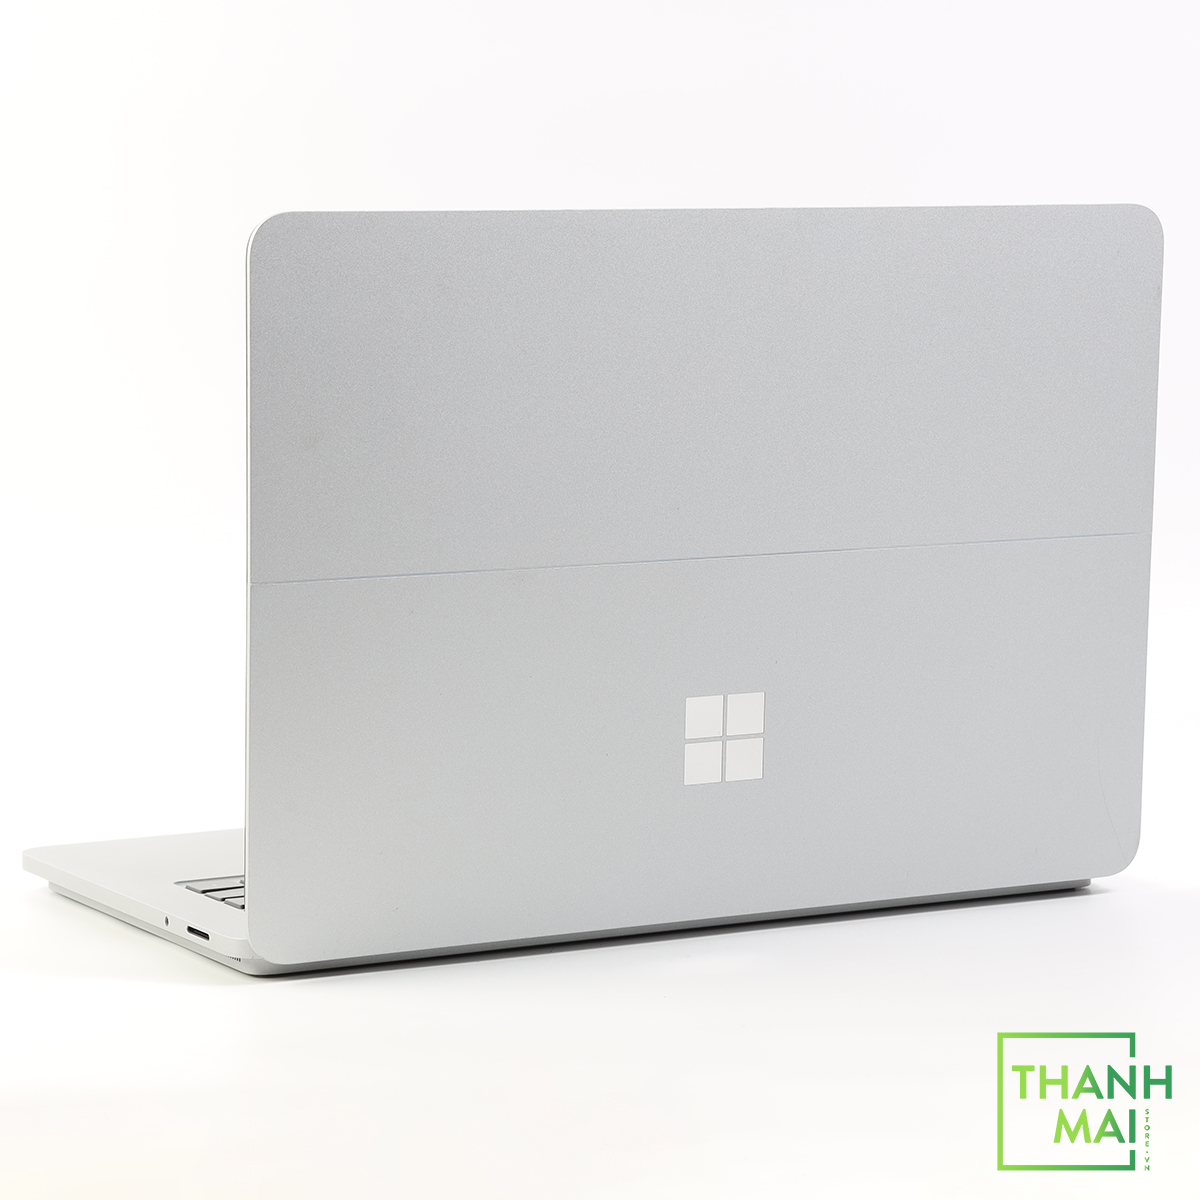 Microsoft Surface Laptop Studio CoreTM i7